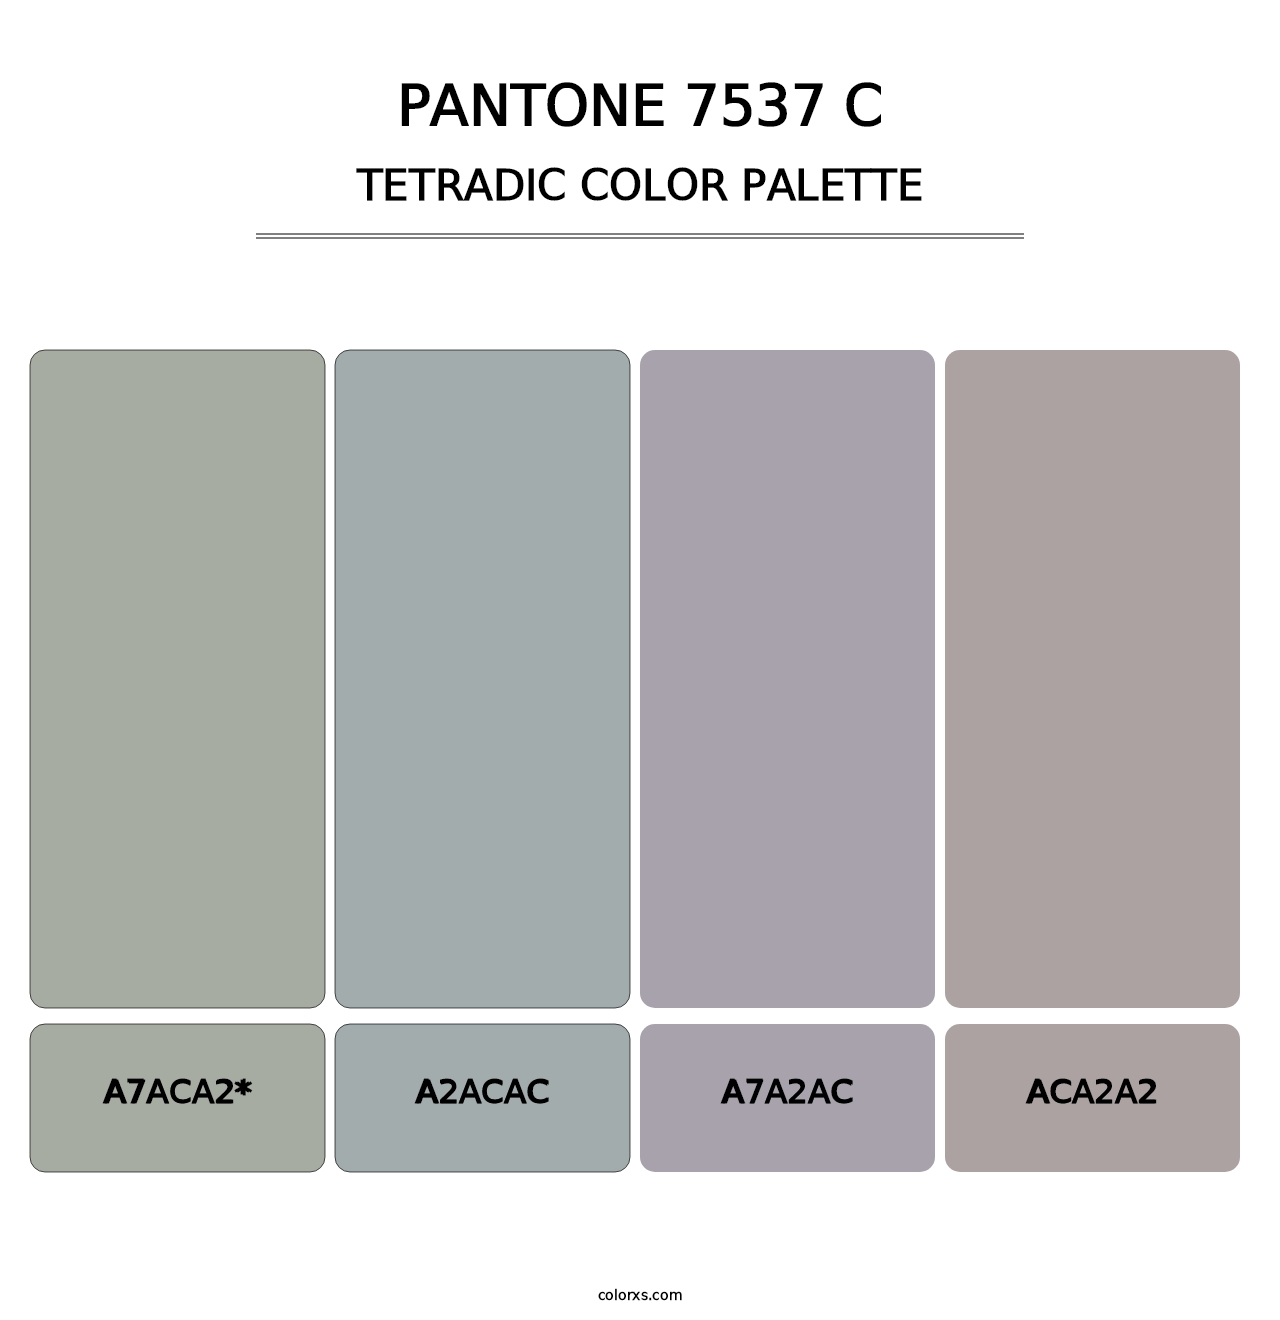 PANTONE 7537 C - Tetradic Color Palette